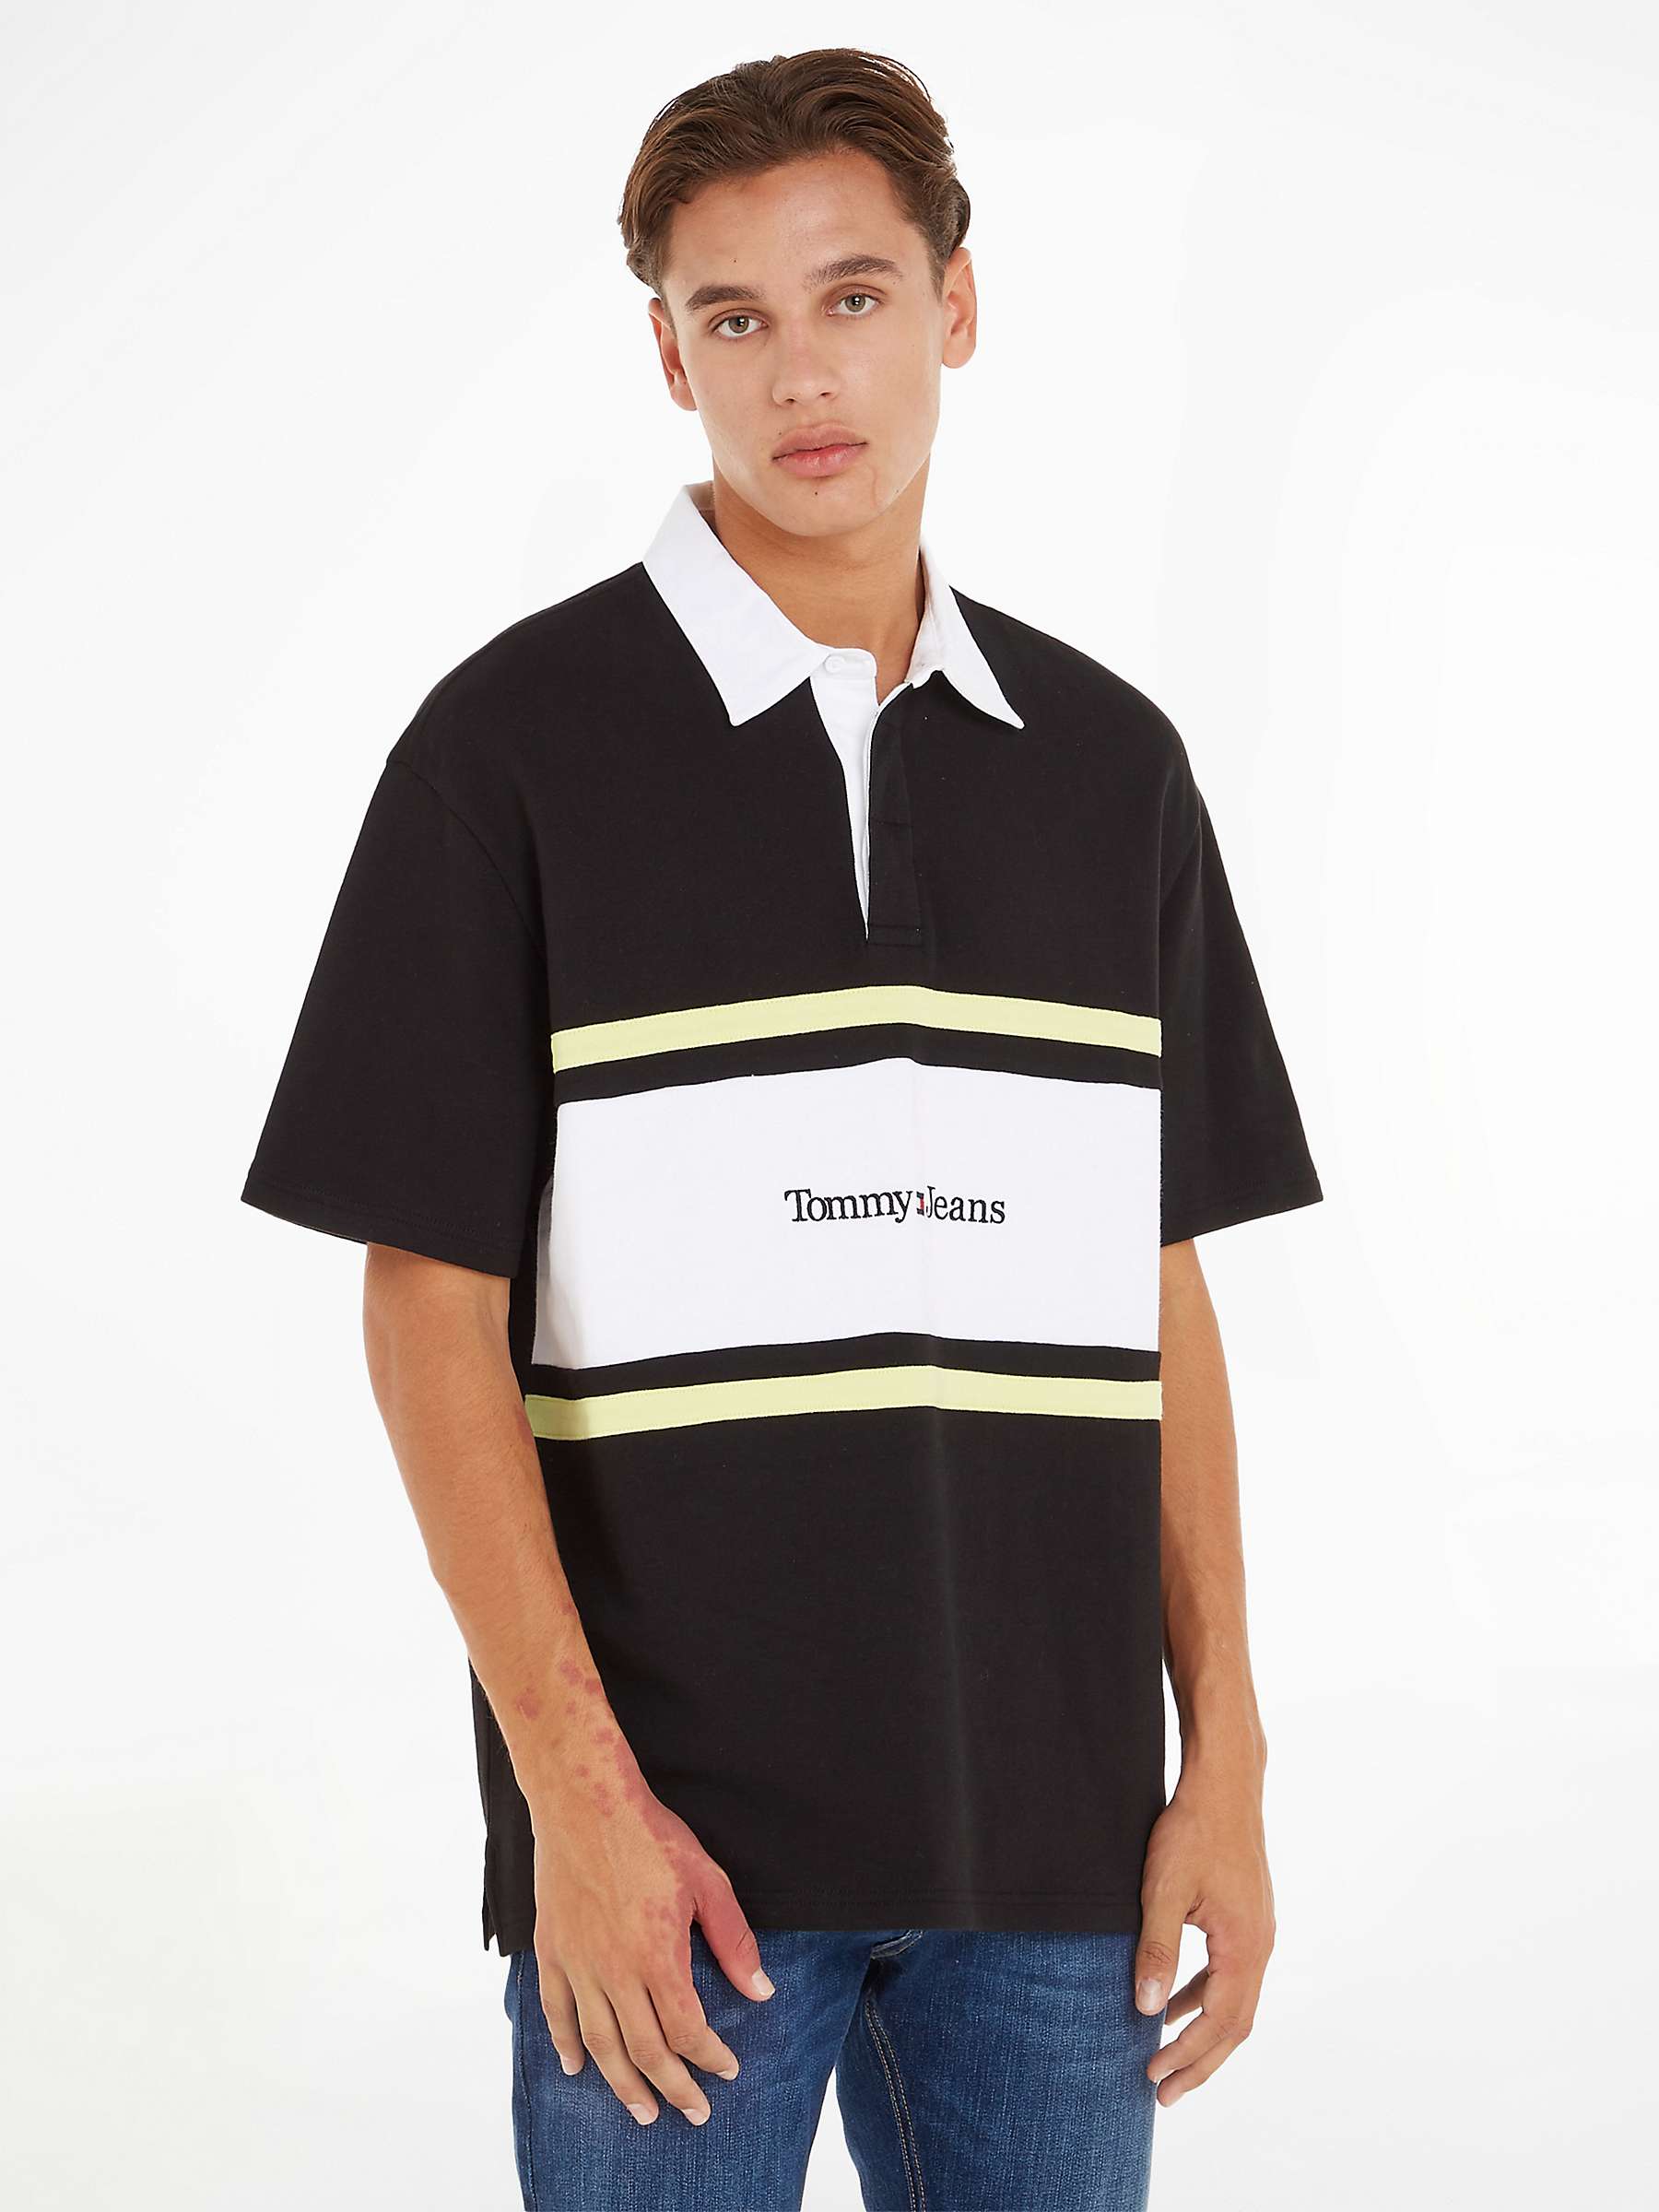 Buy Tommy Jeans Stripe Rugby Shirt, Black Online at johnlewis.com